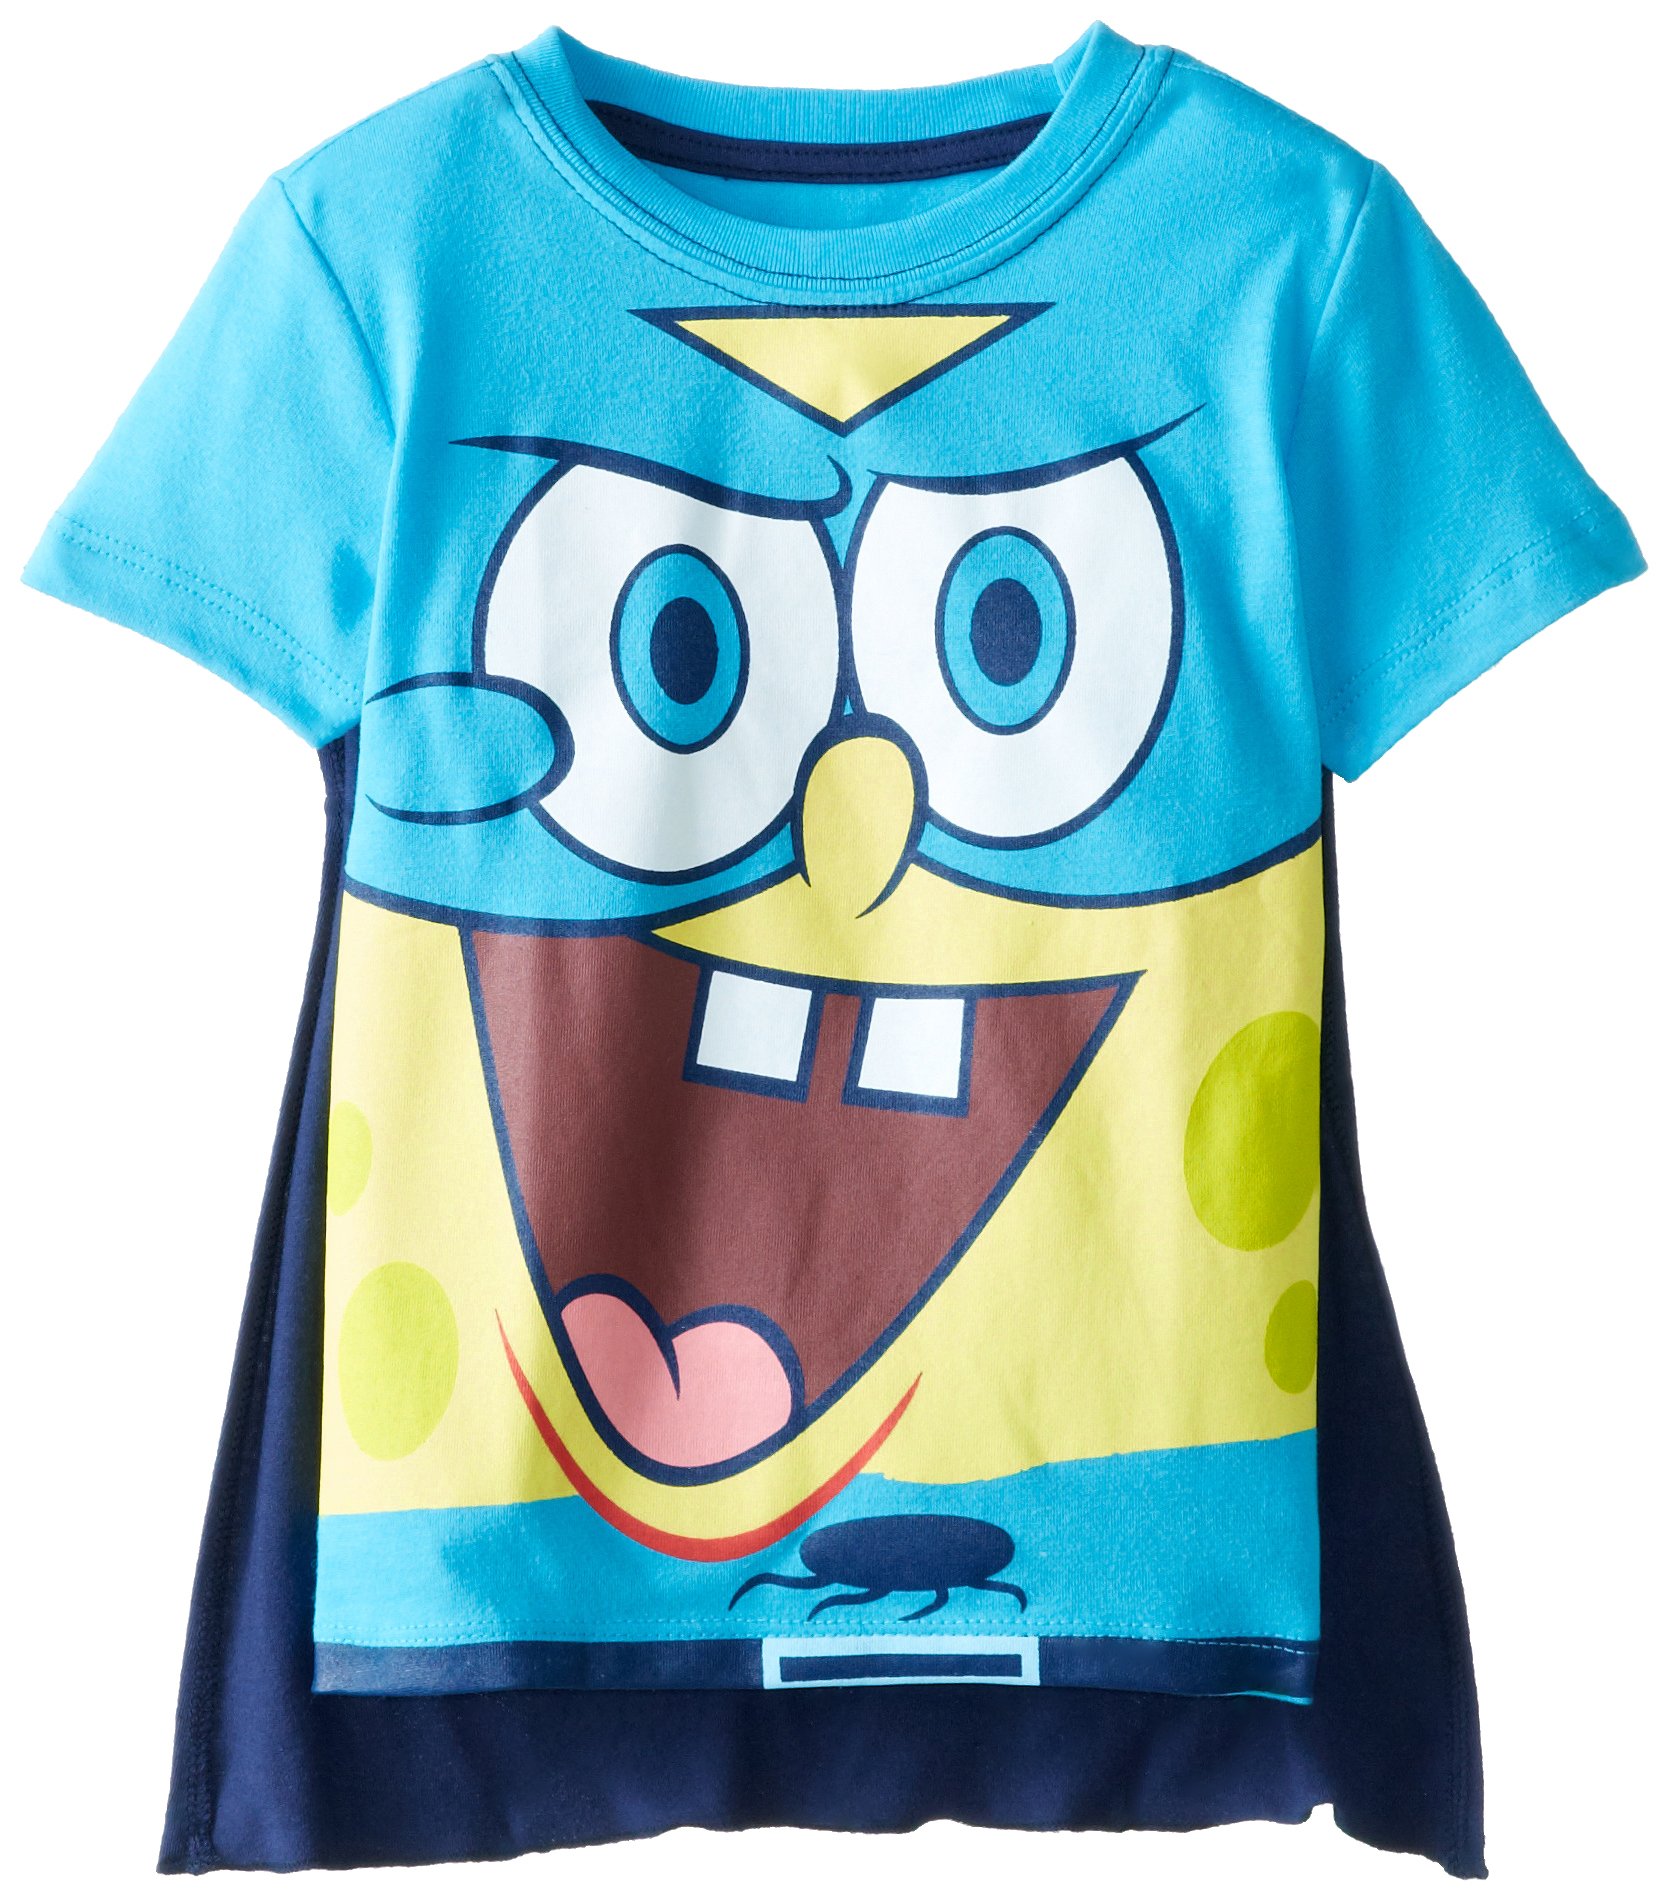 Nickelodeon Boys' Toddler Spongebob Squarepants Tee Shirt with Cape